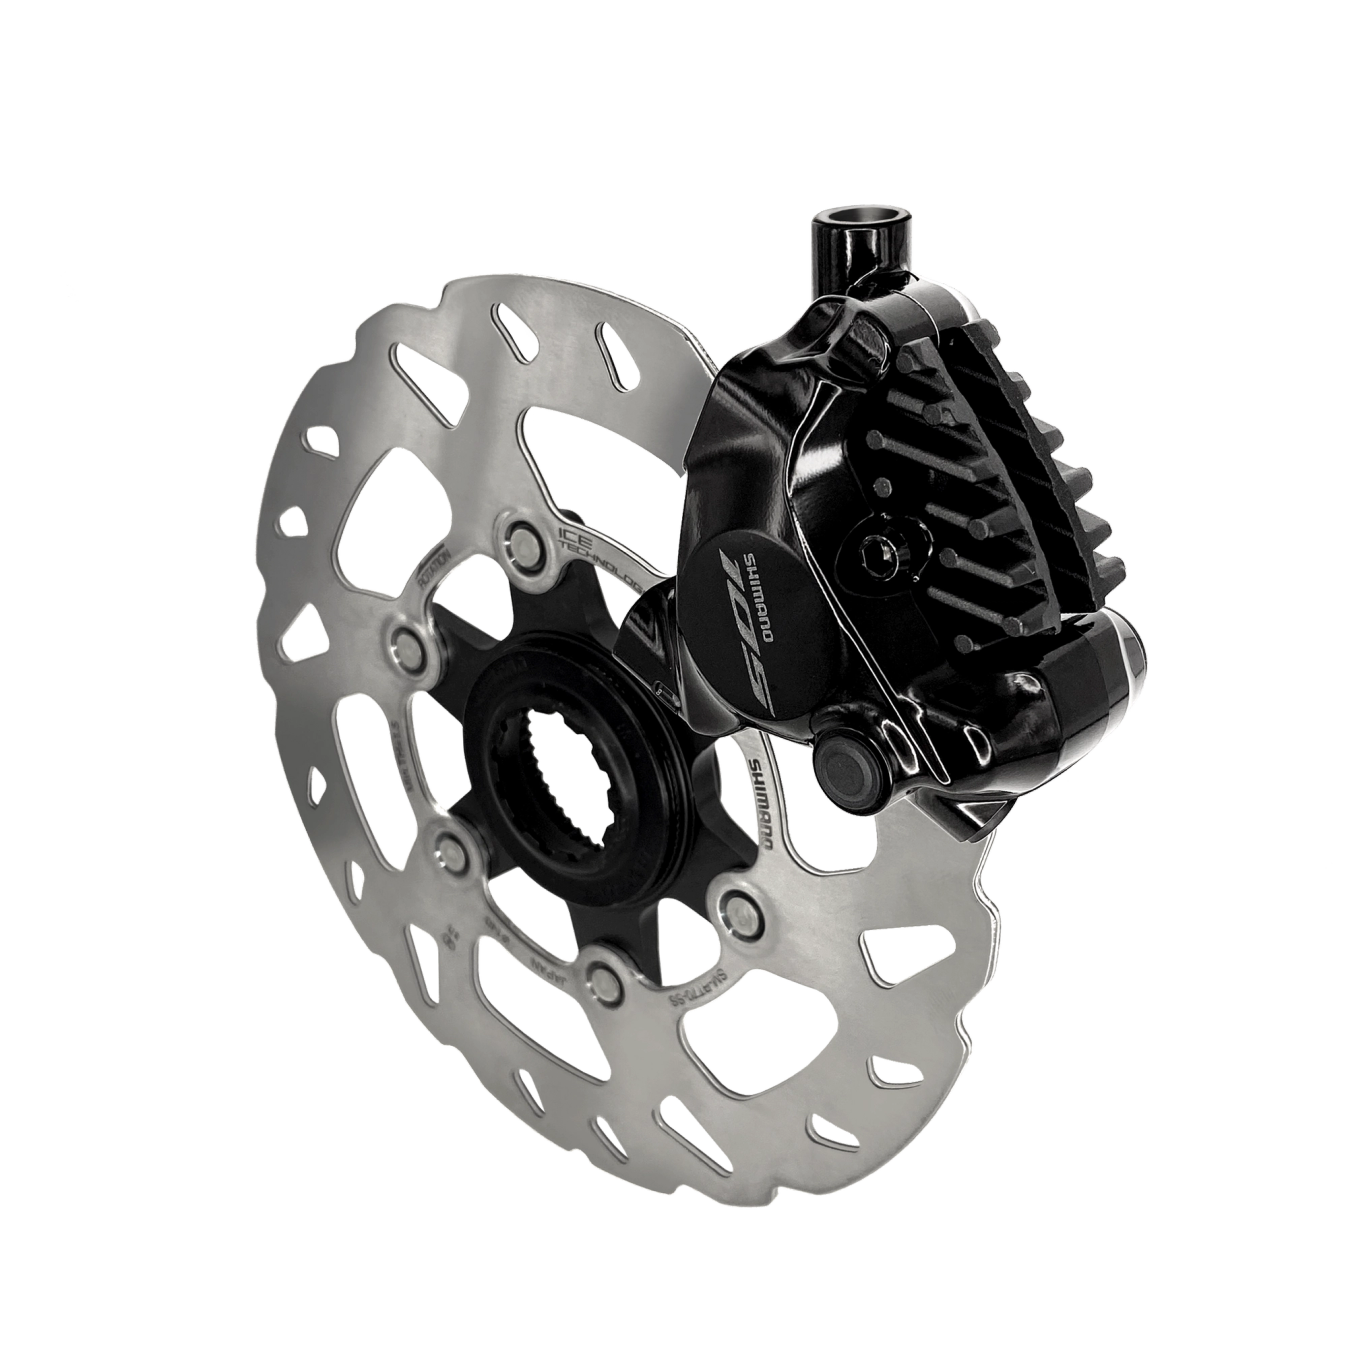 Shimano 105 hydraulic disc brakes